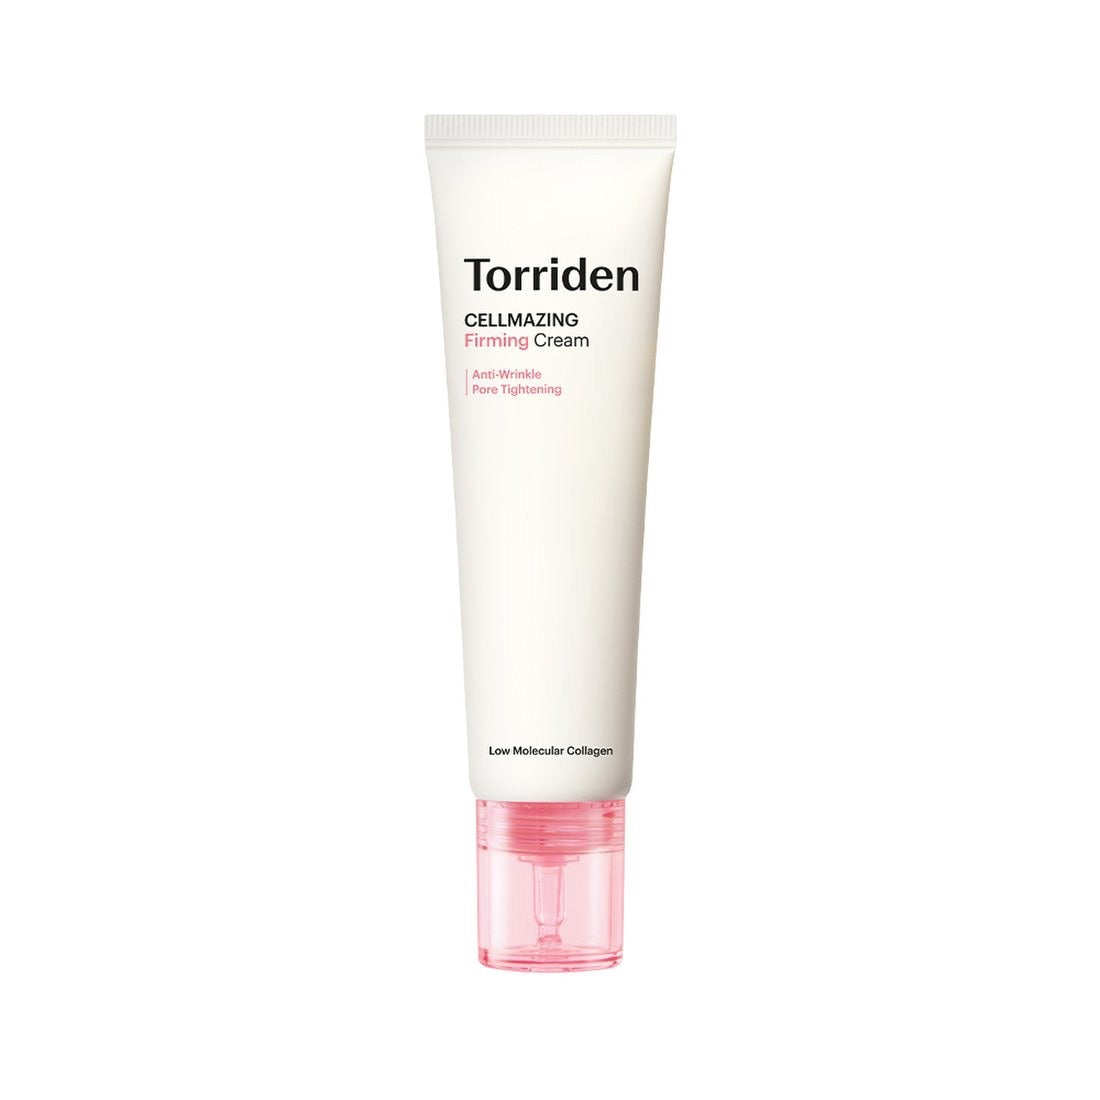 Torriden Cellmazing Firming Cream 60ml